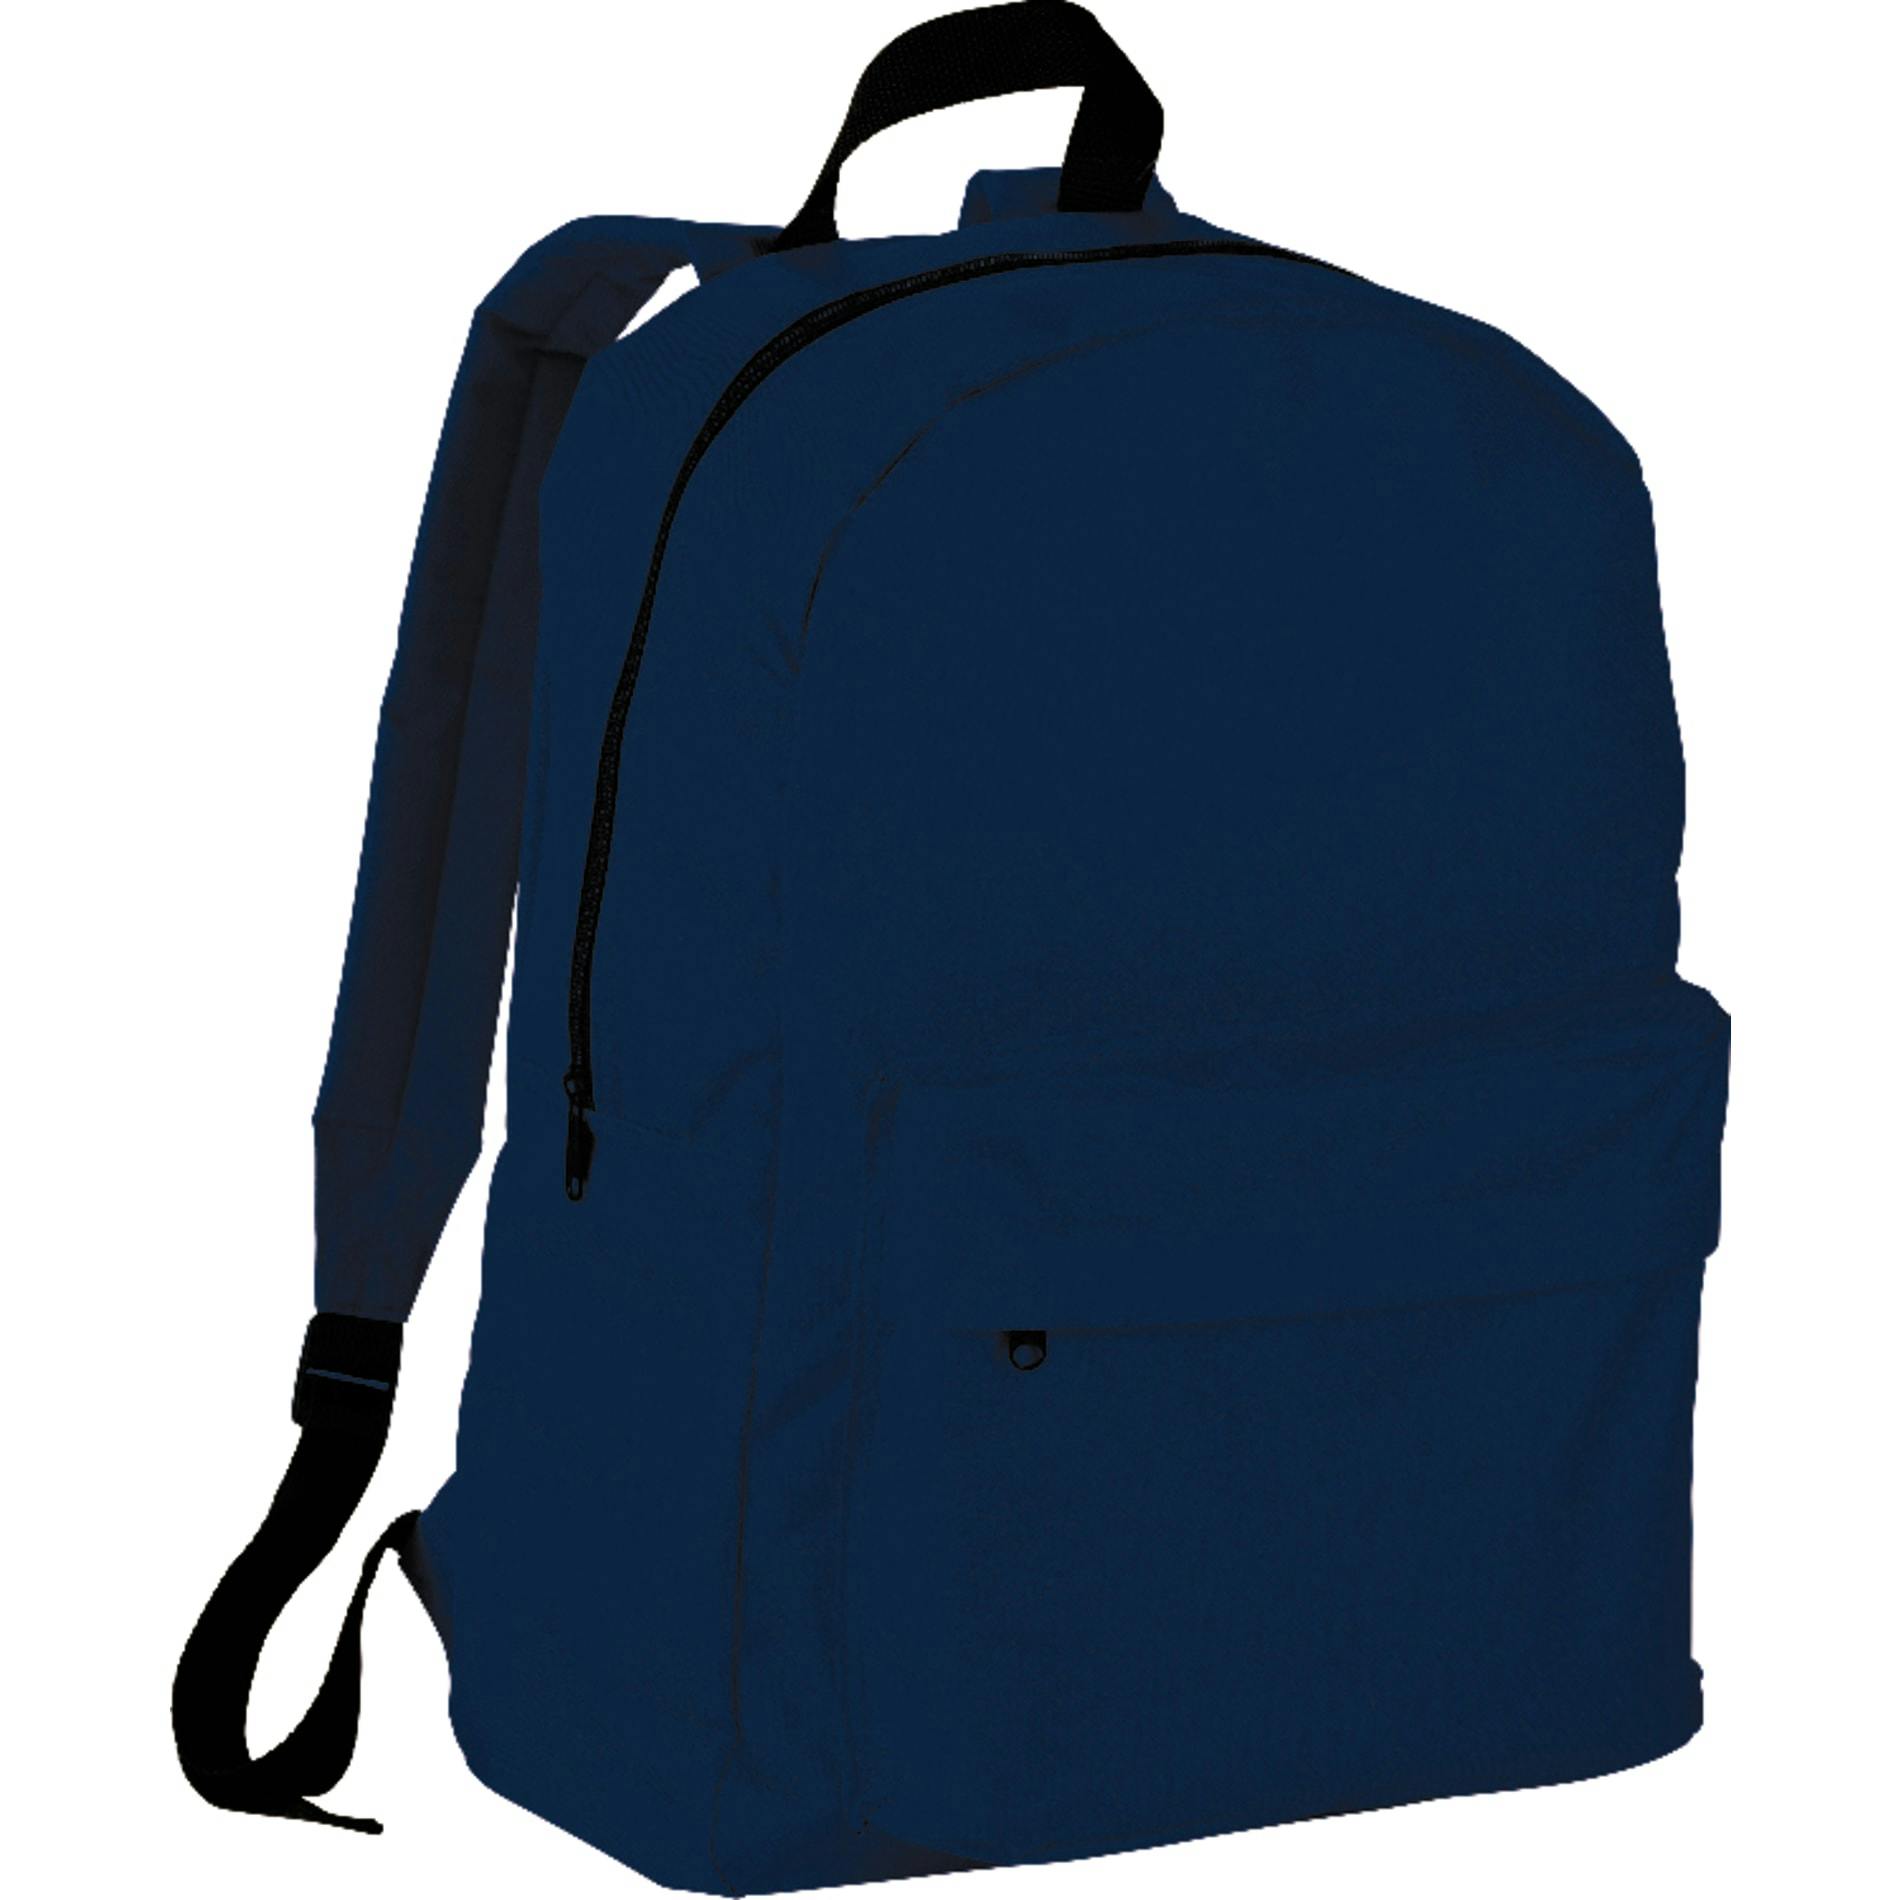 Breckenridge Classic Backpack - additional Image 2